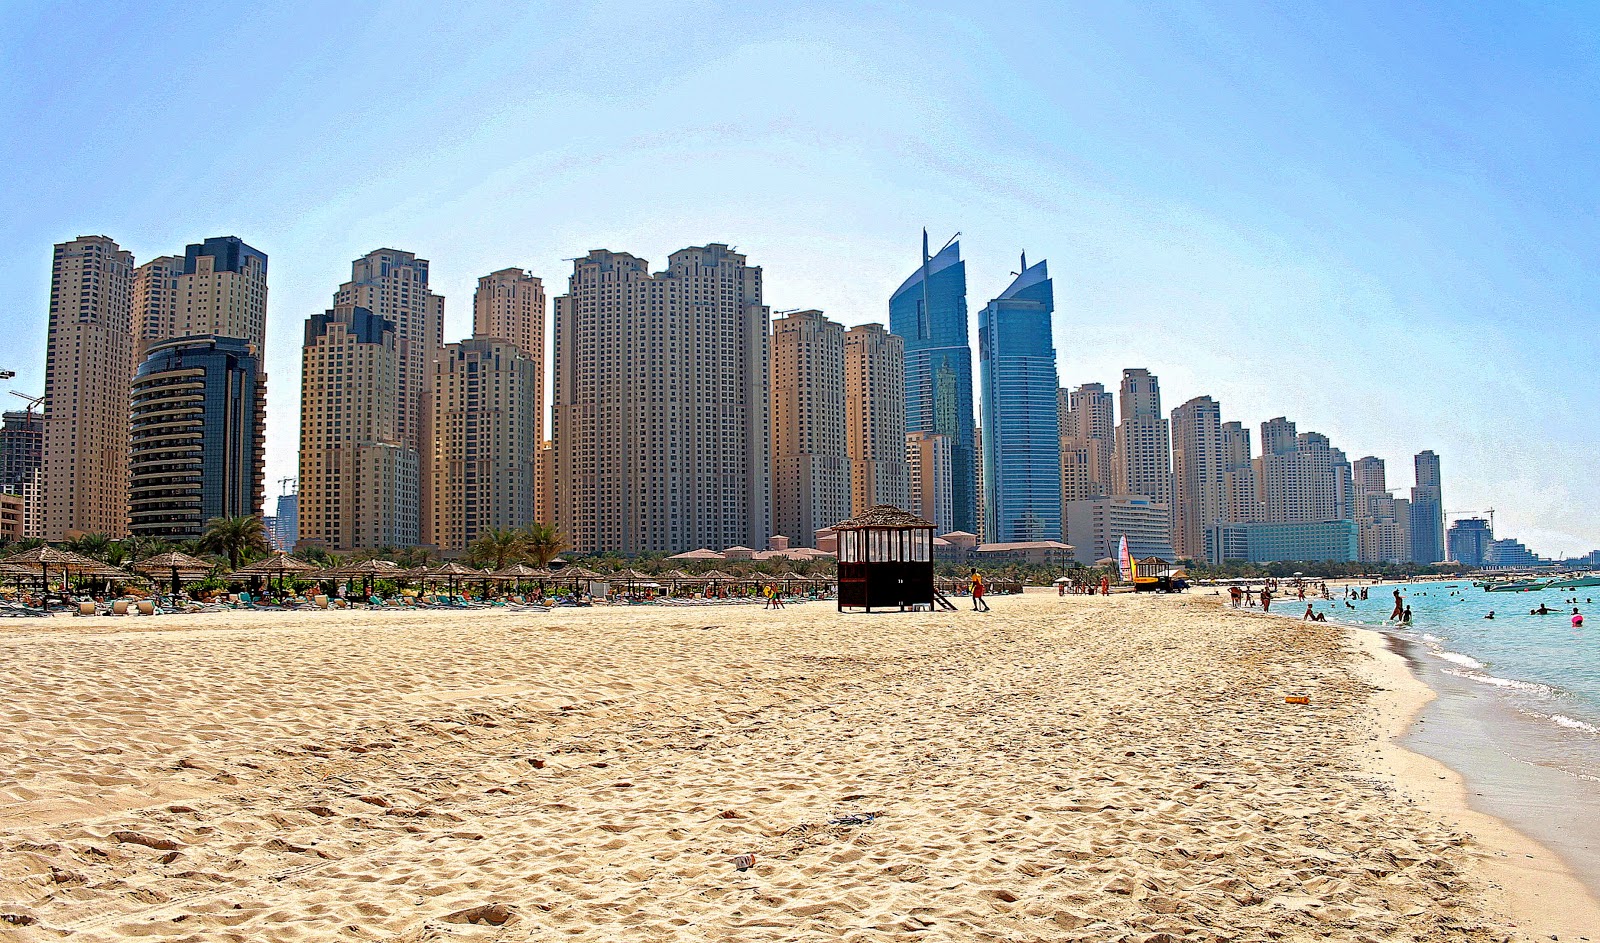 Jumeirah Beach Residence   Wikipedia the free encyclopedia